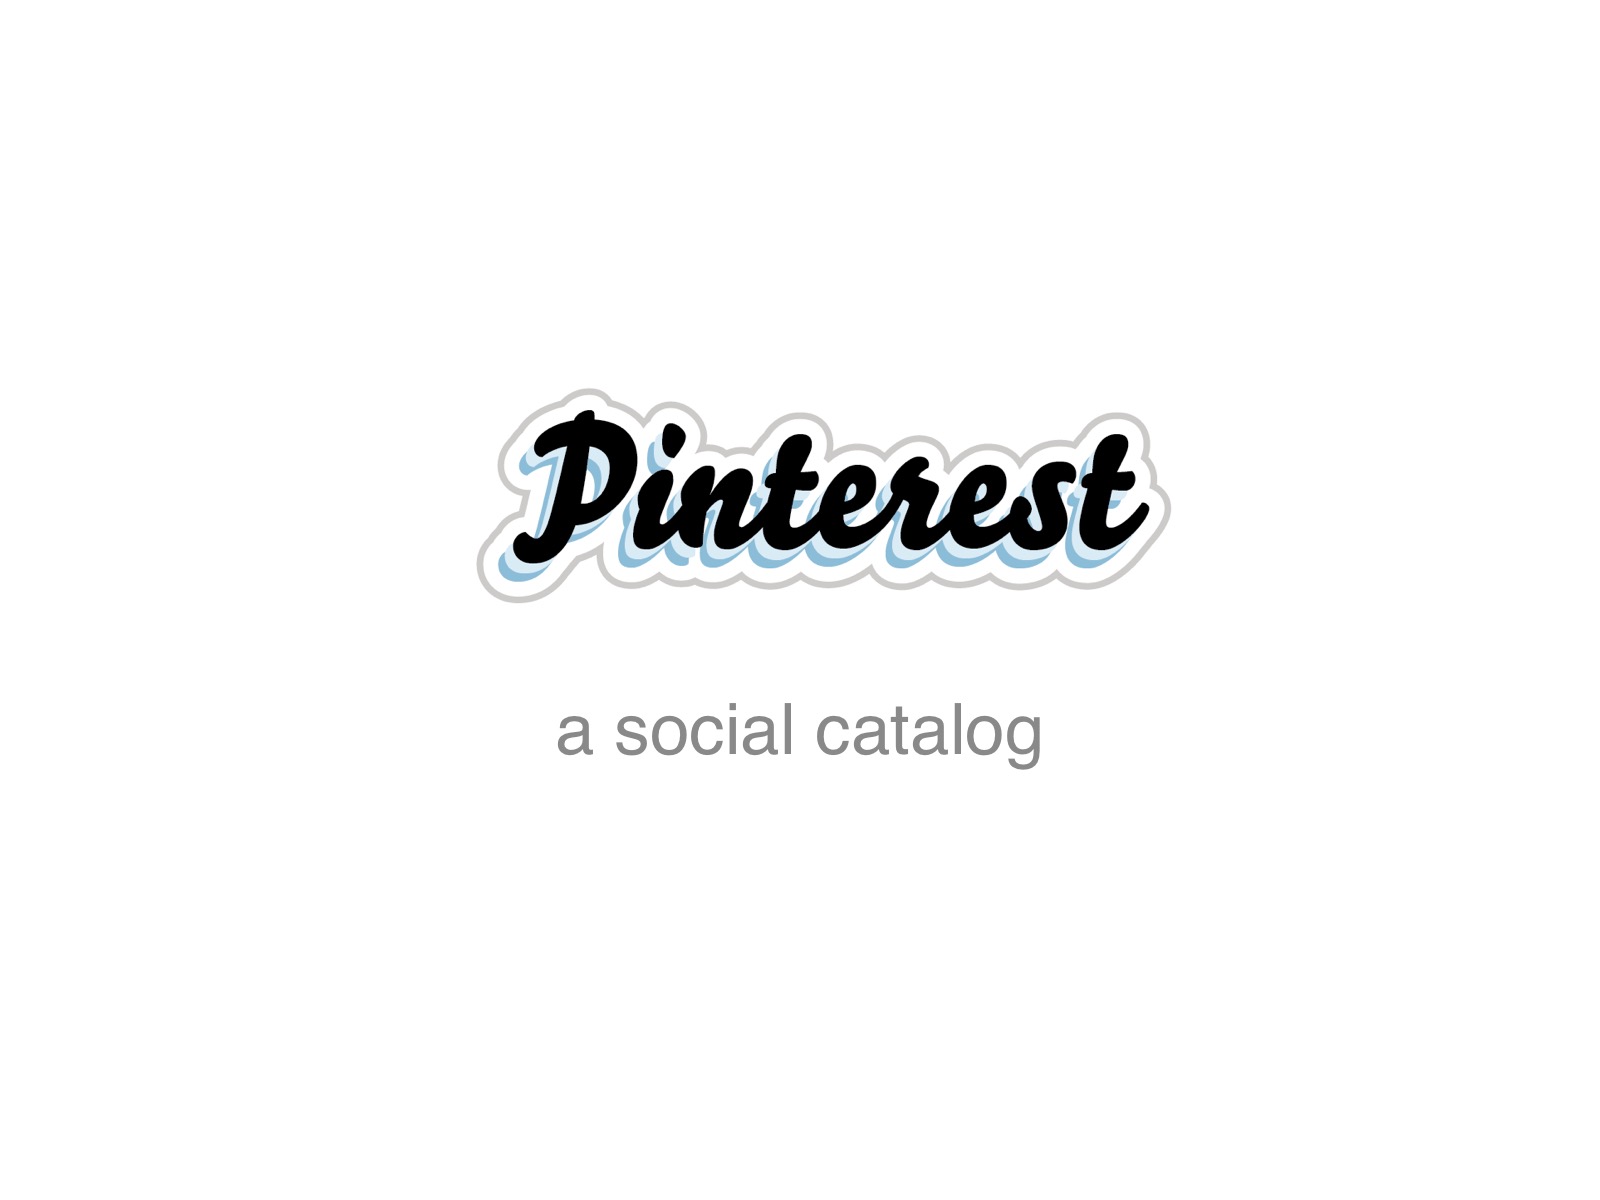 Slide from Pinterest pitch deck